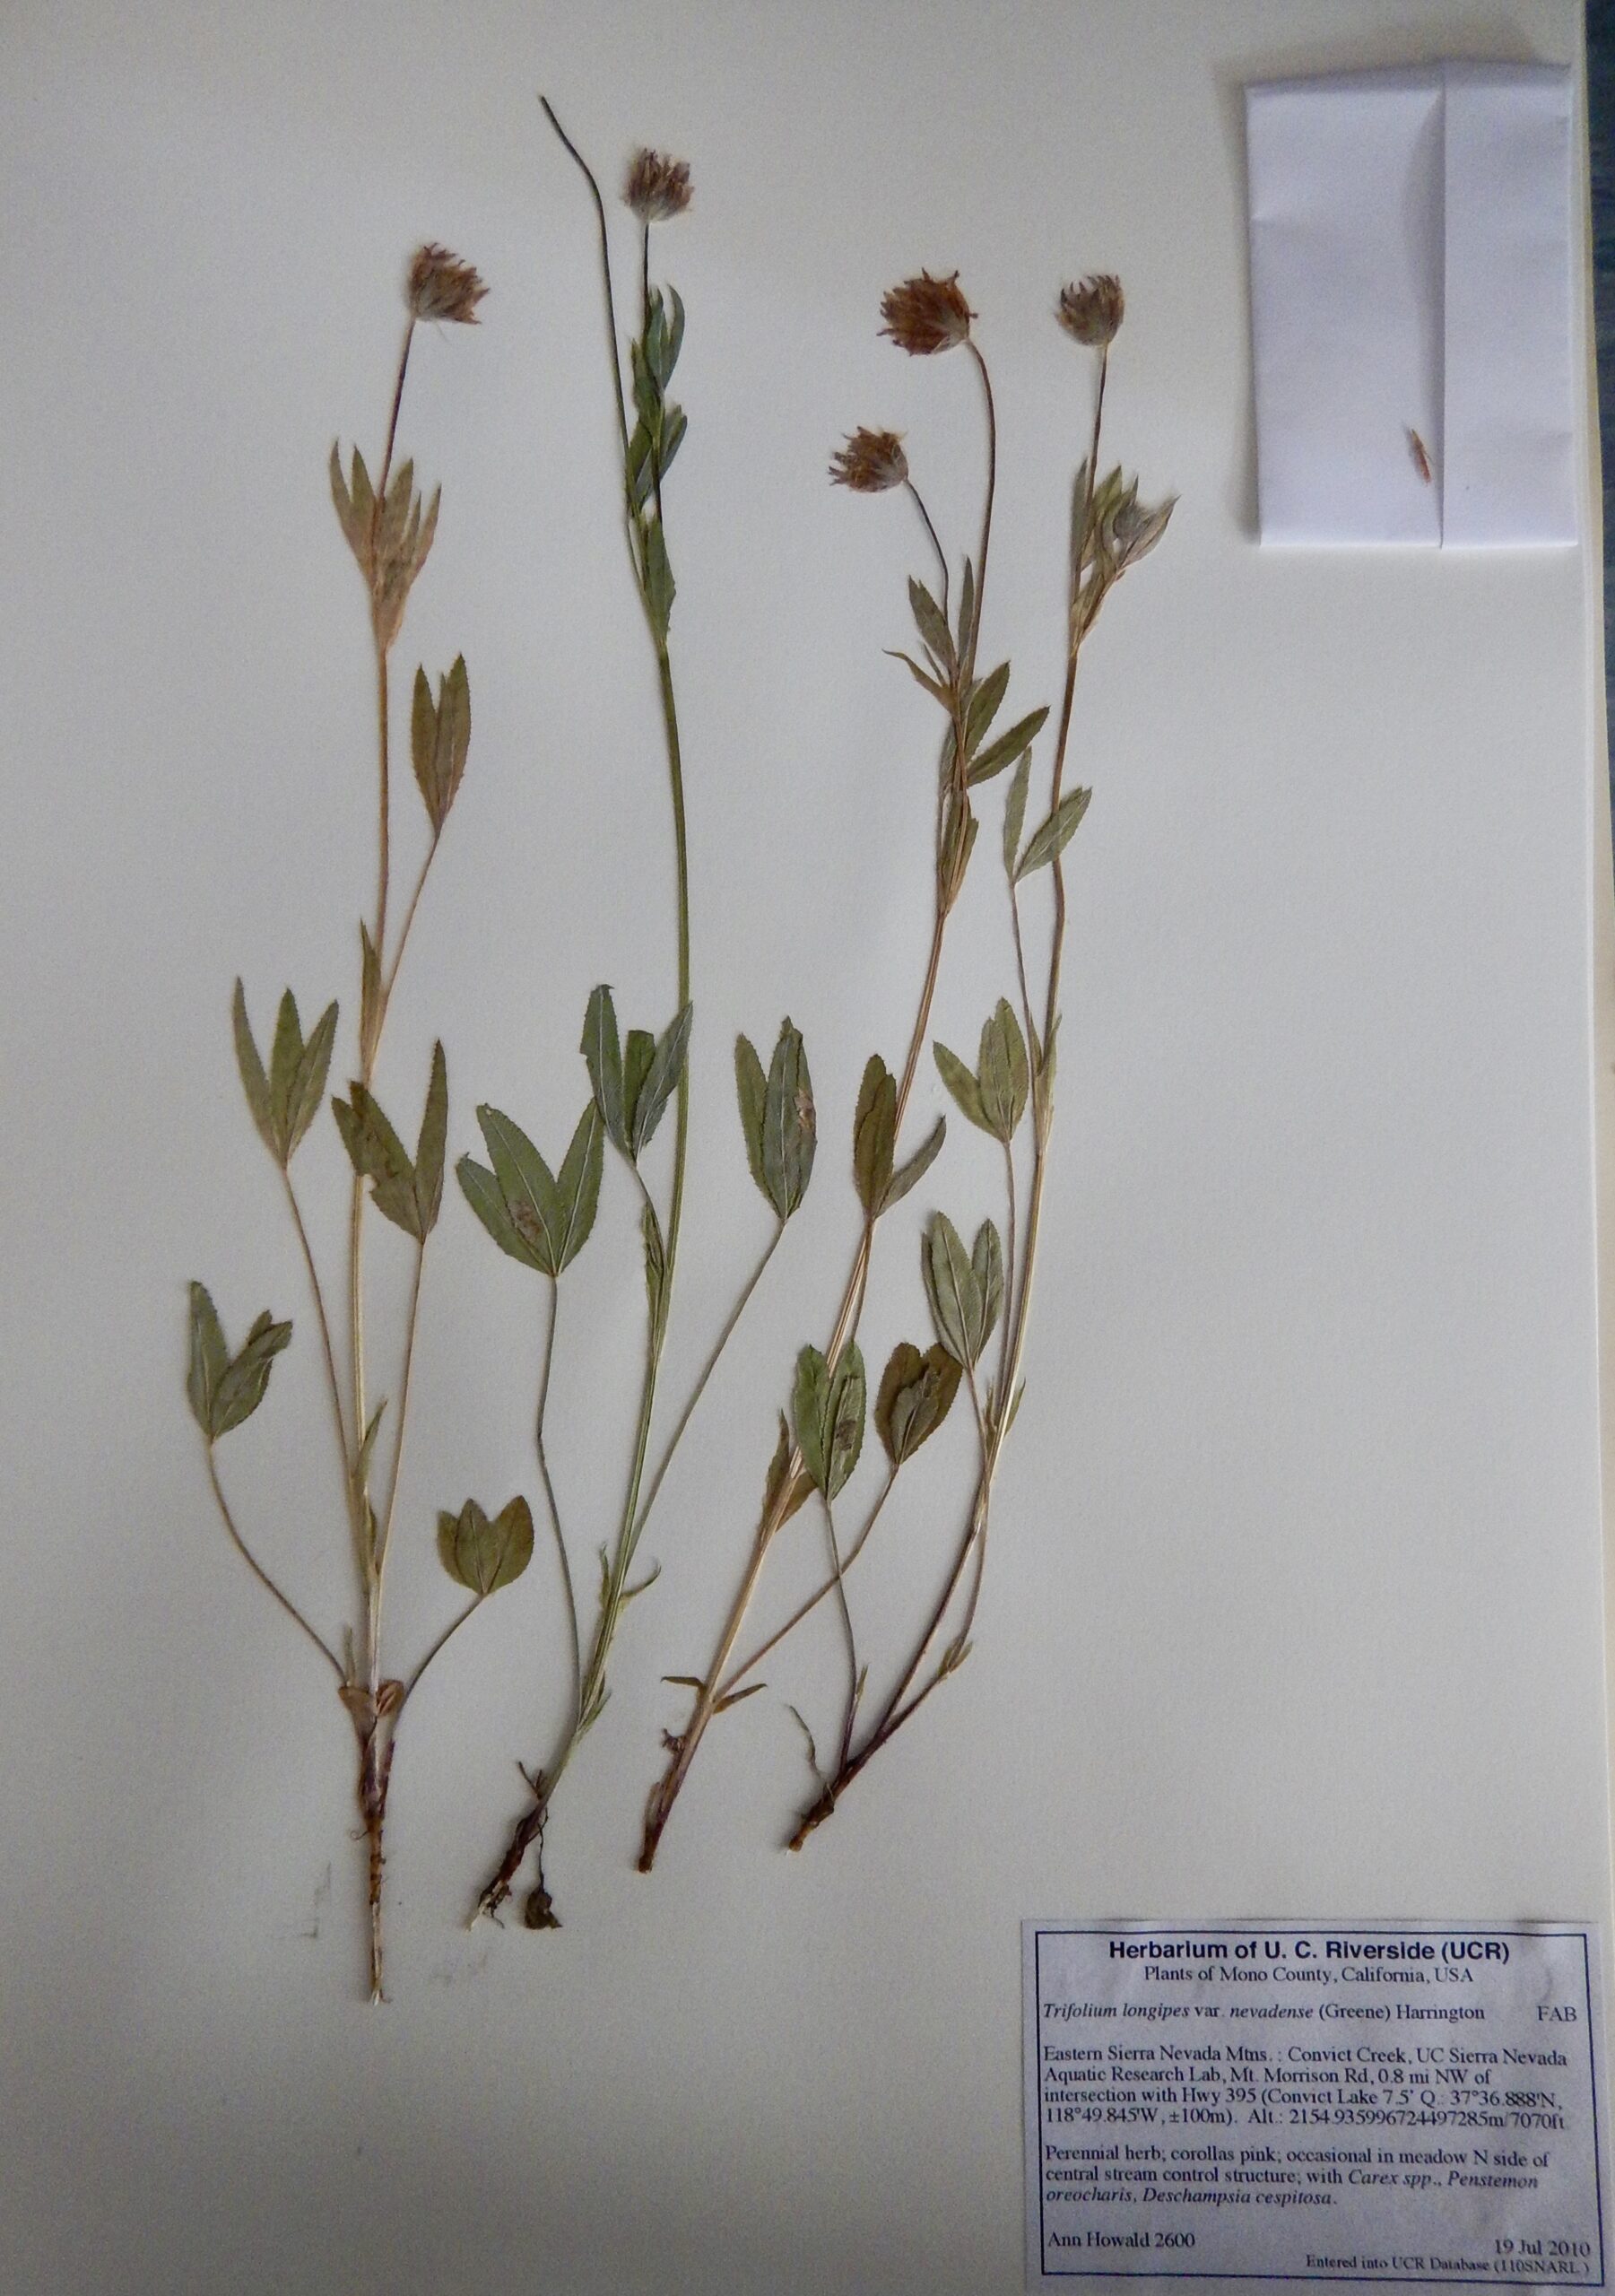 Trifolium longipes ssp. nevadense